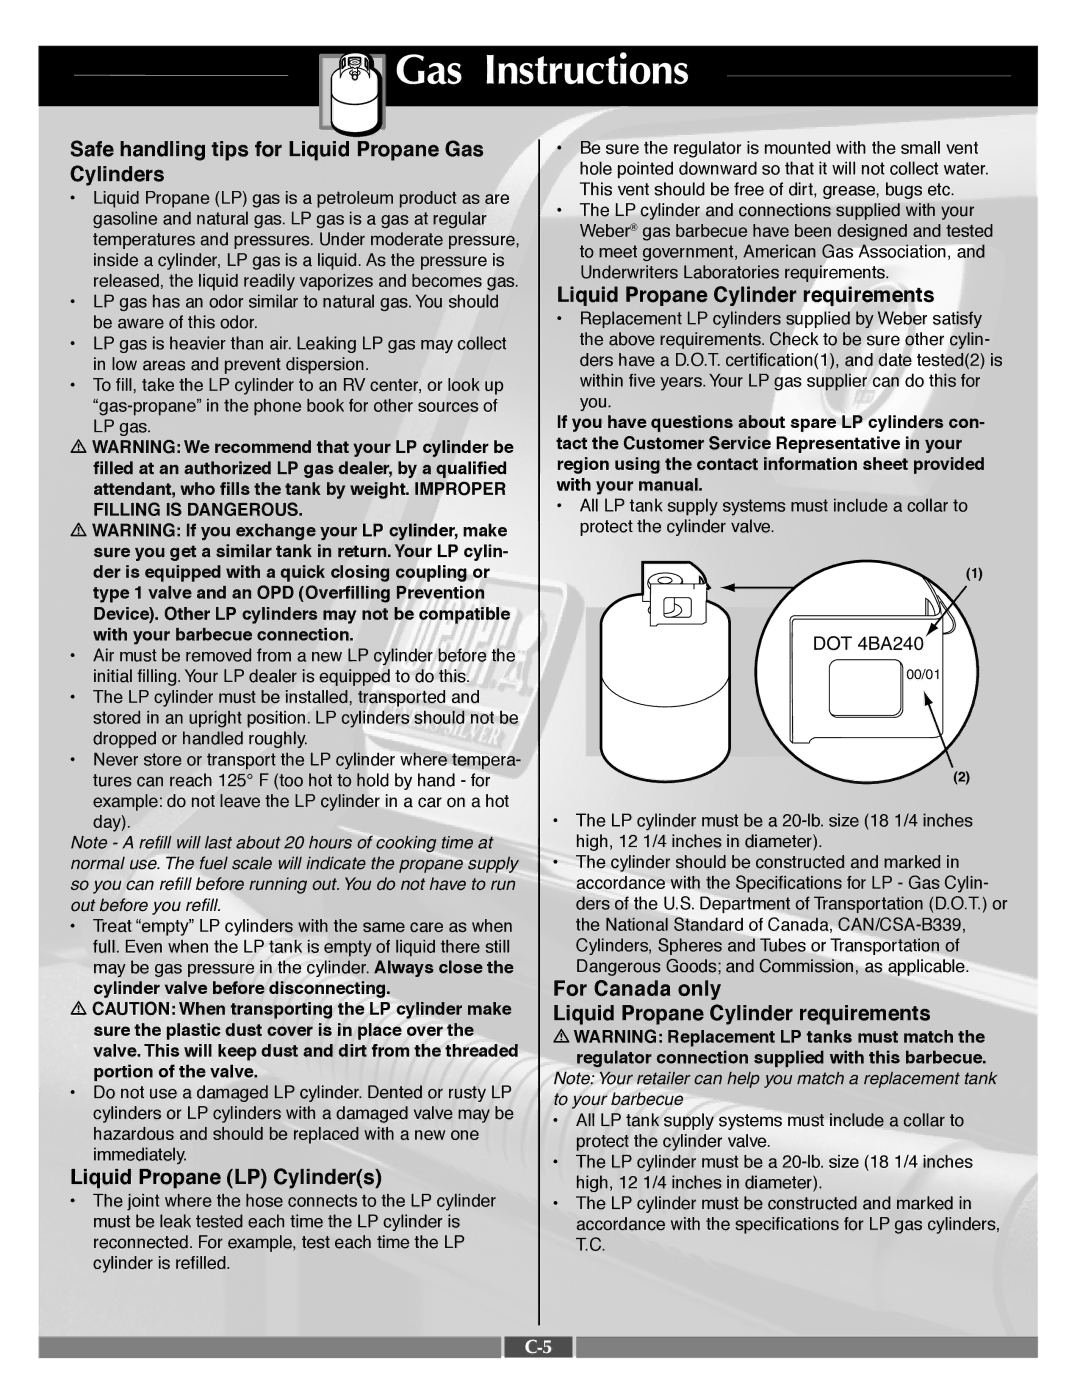 Weber 55568 Safe handling tips for Liquid Propane Gas, Cylinders, Liquid Propane Cylinder requirements, For Canada only 